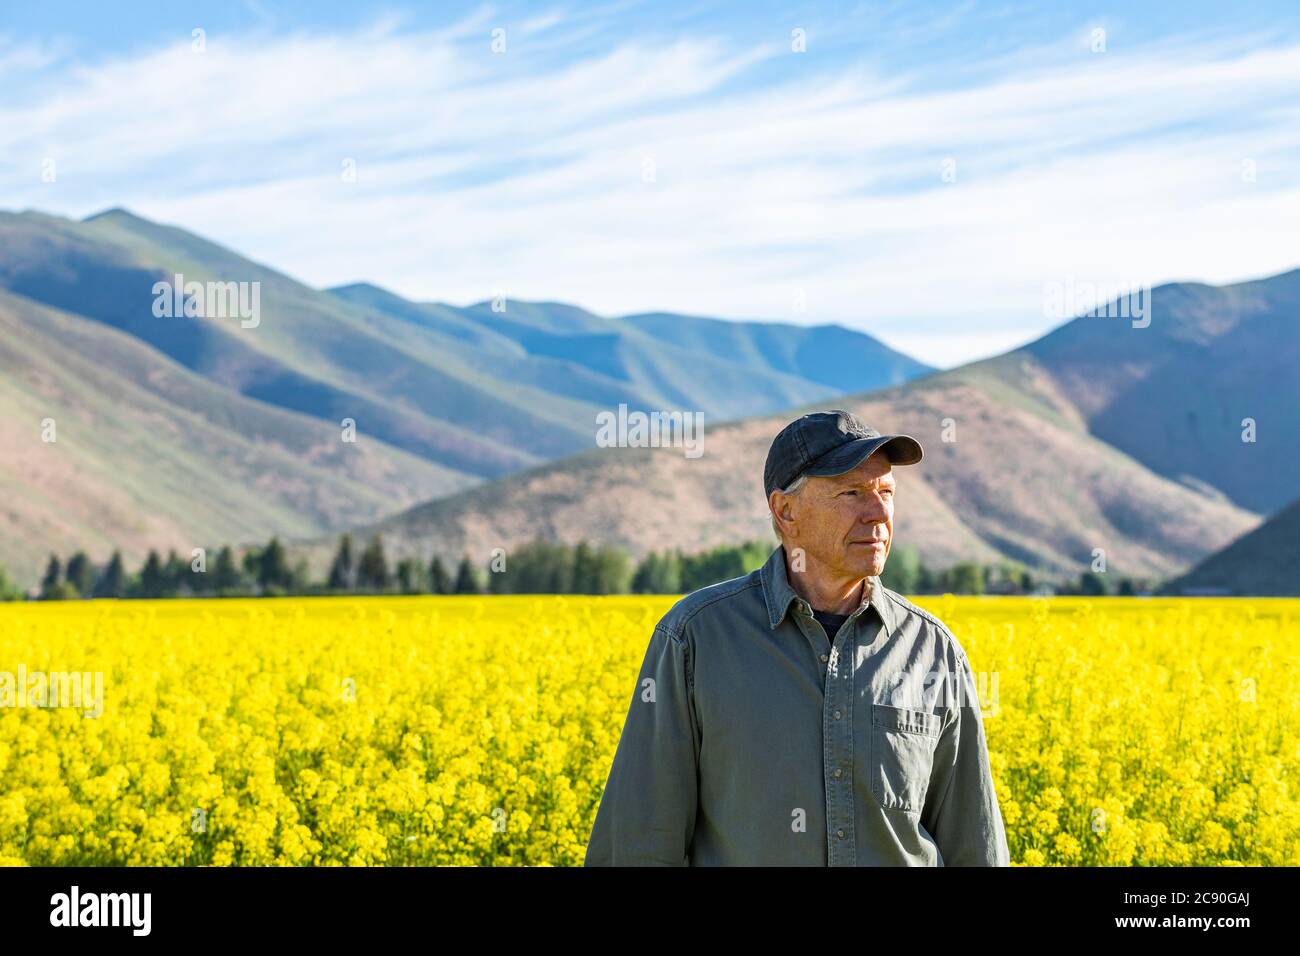 USA, Farmer standing in mustard field Stock Photo